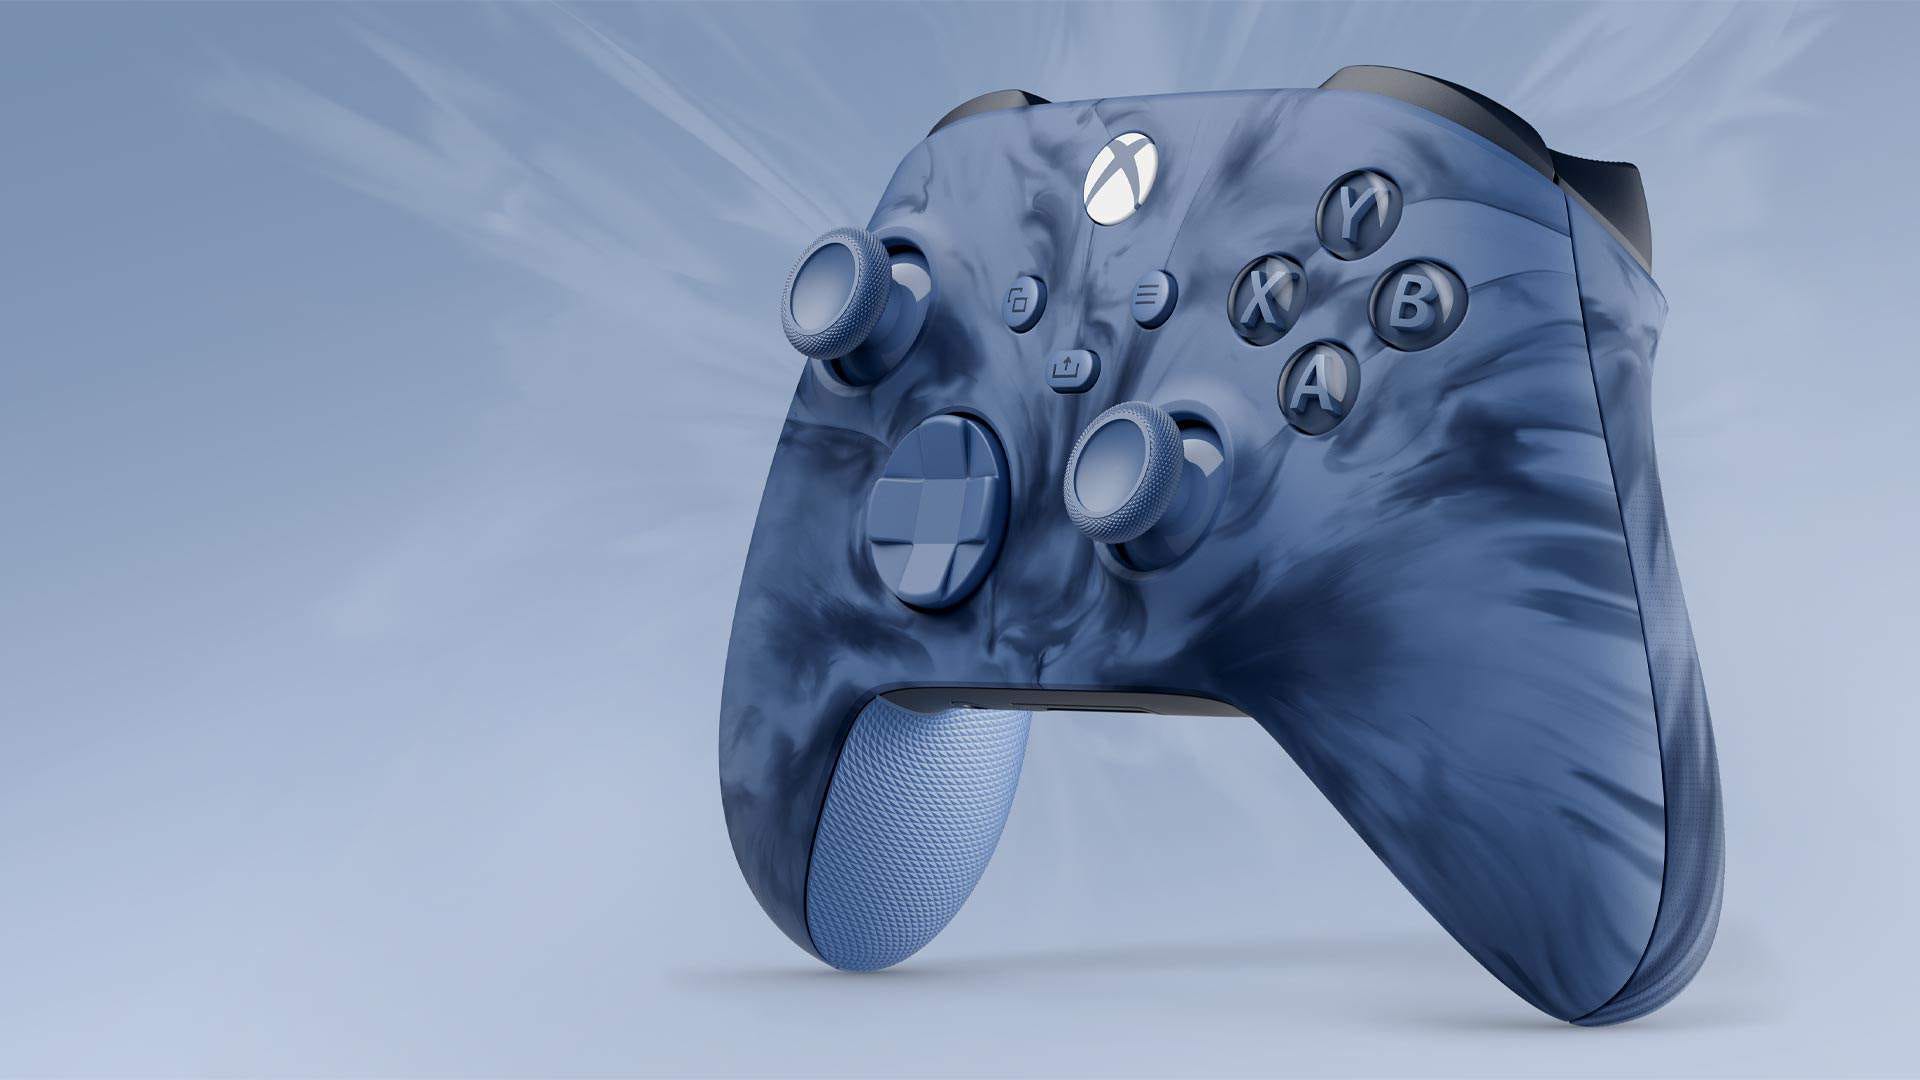 Control Xbox Elite blue evergreen